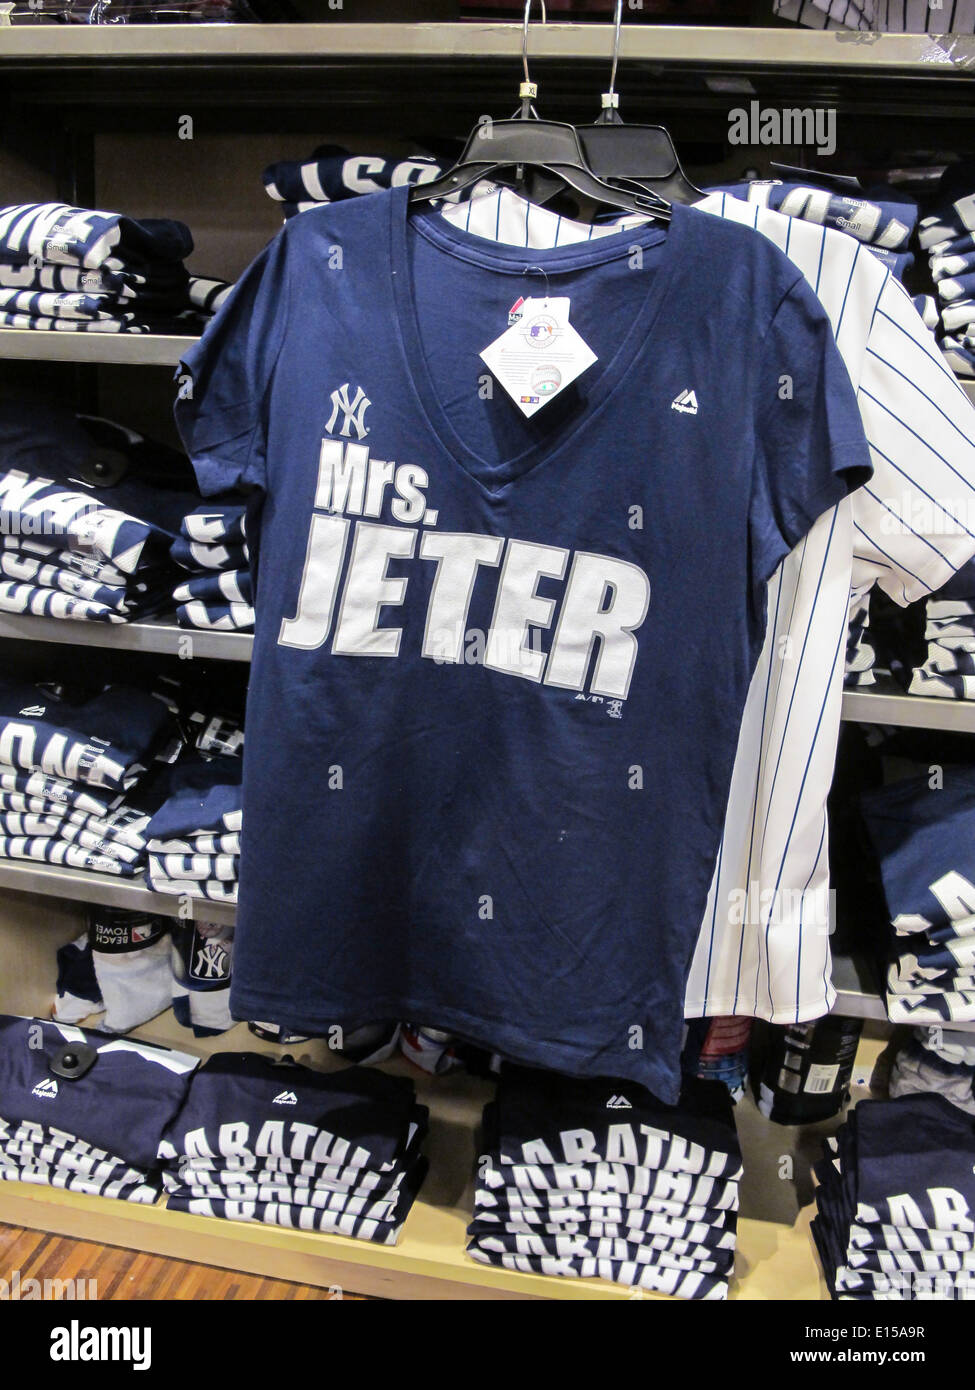 New York Yankees' Jerseys, Modell's Sporting Goods Store Interior, NYC  Stock Photo - Alamy